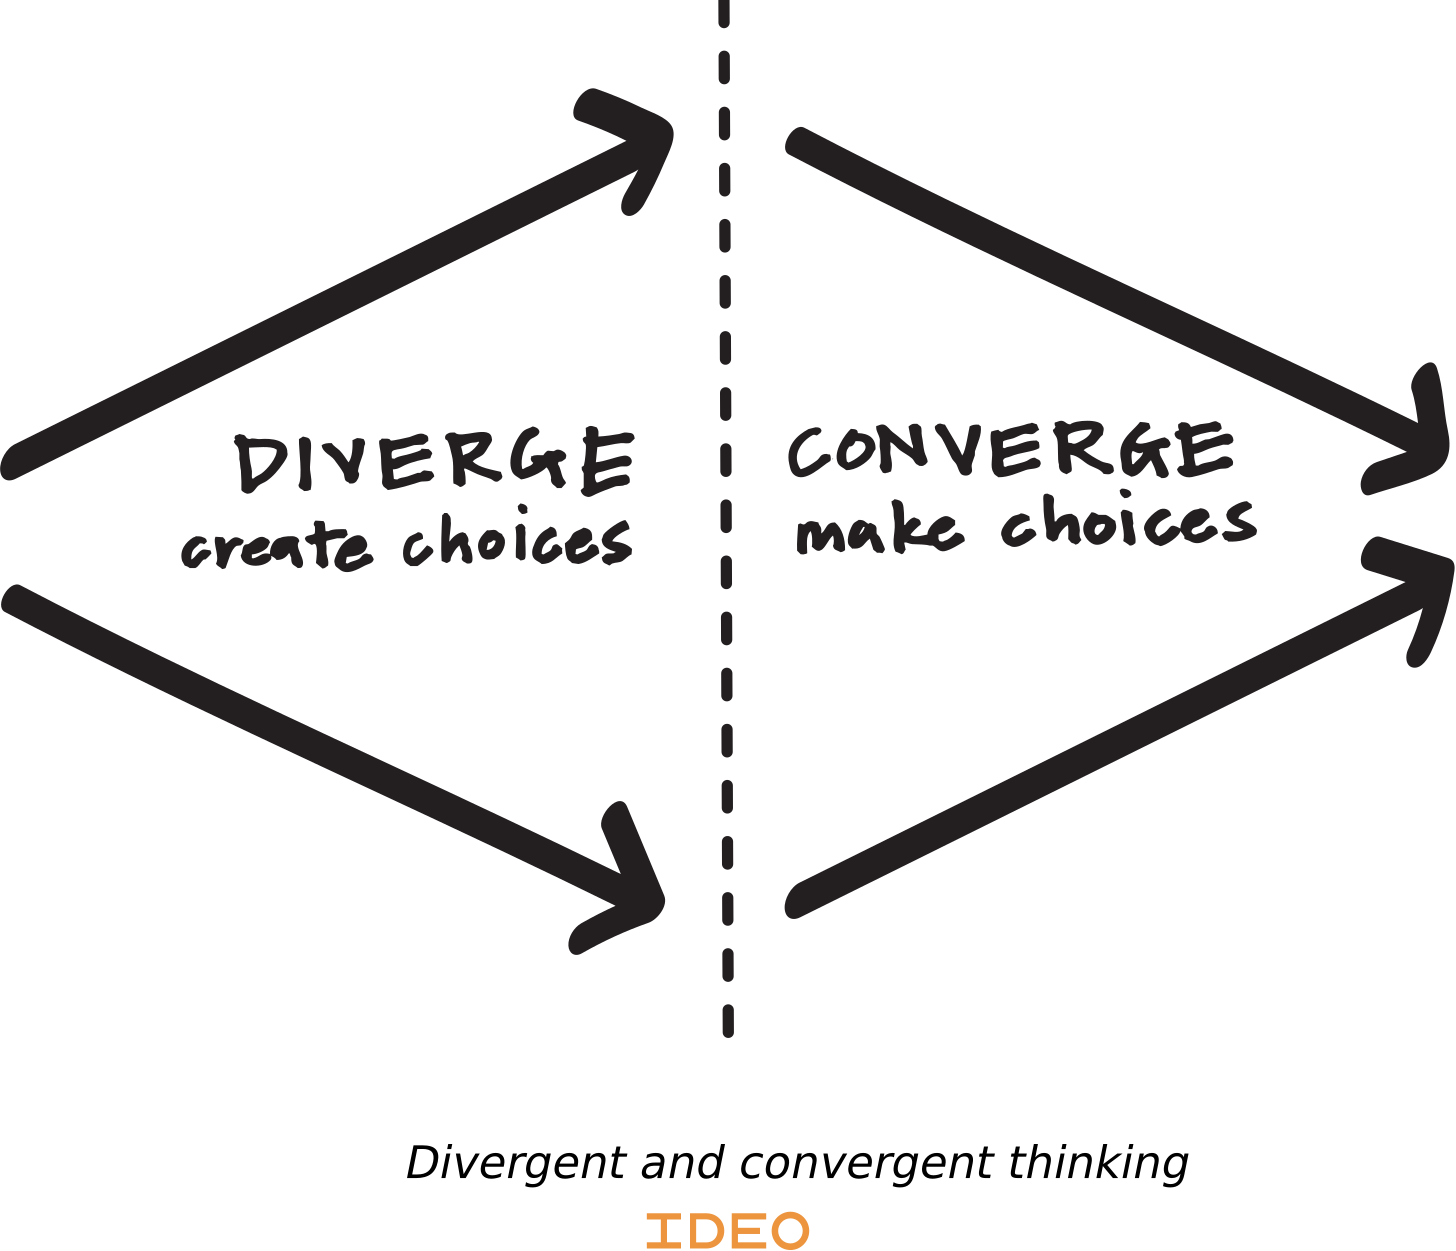 Divergent and convergent thinking diagram